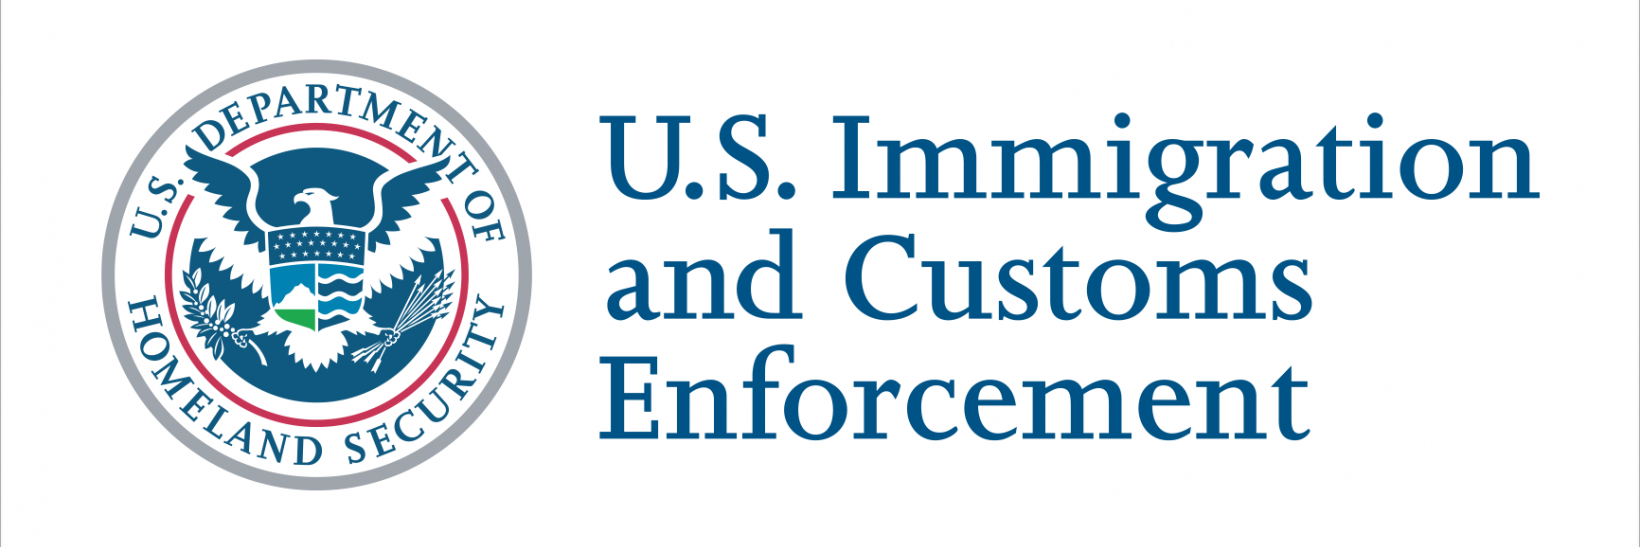 U.S. Immigration and Customs Enforcement logo